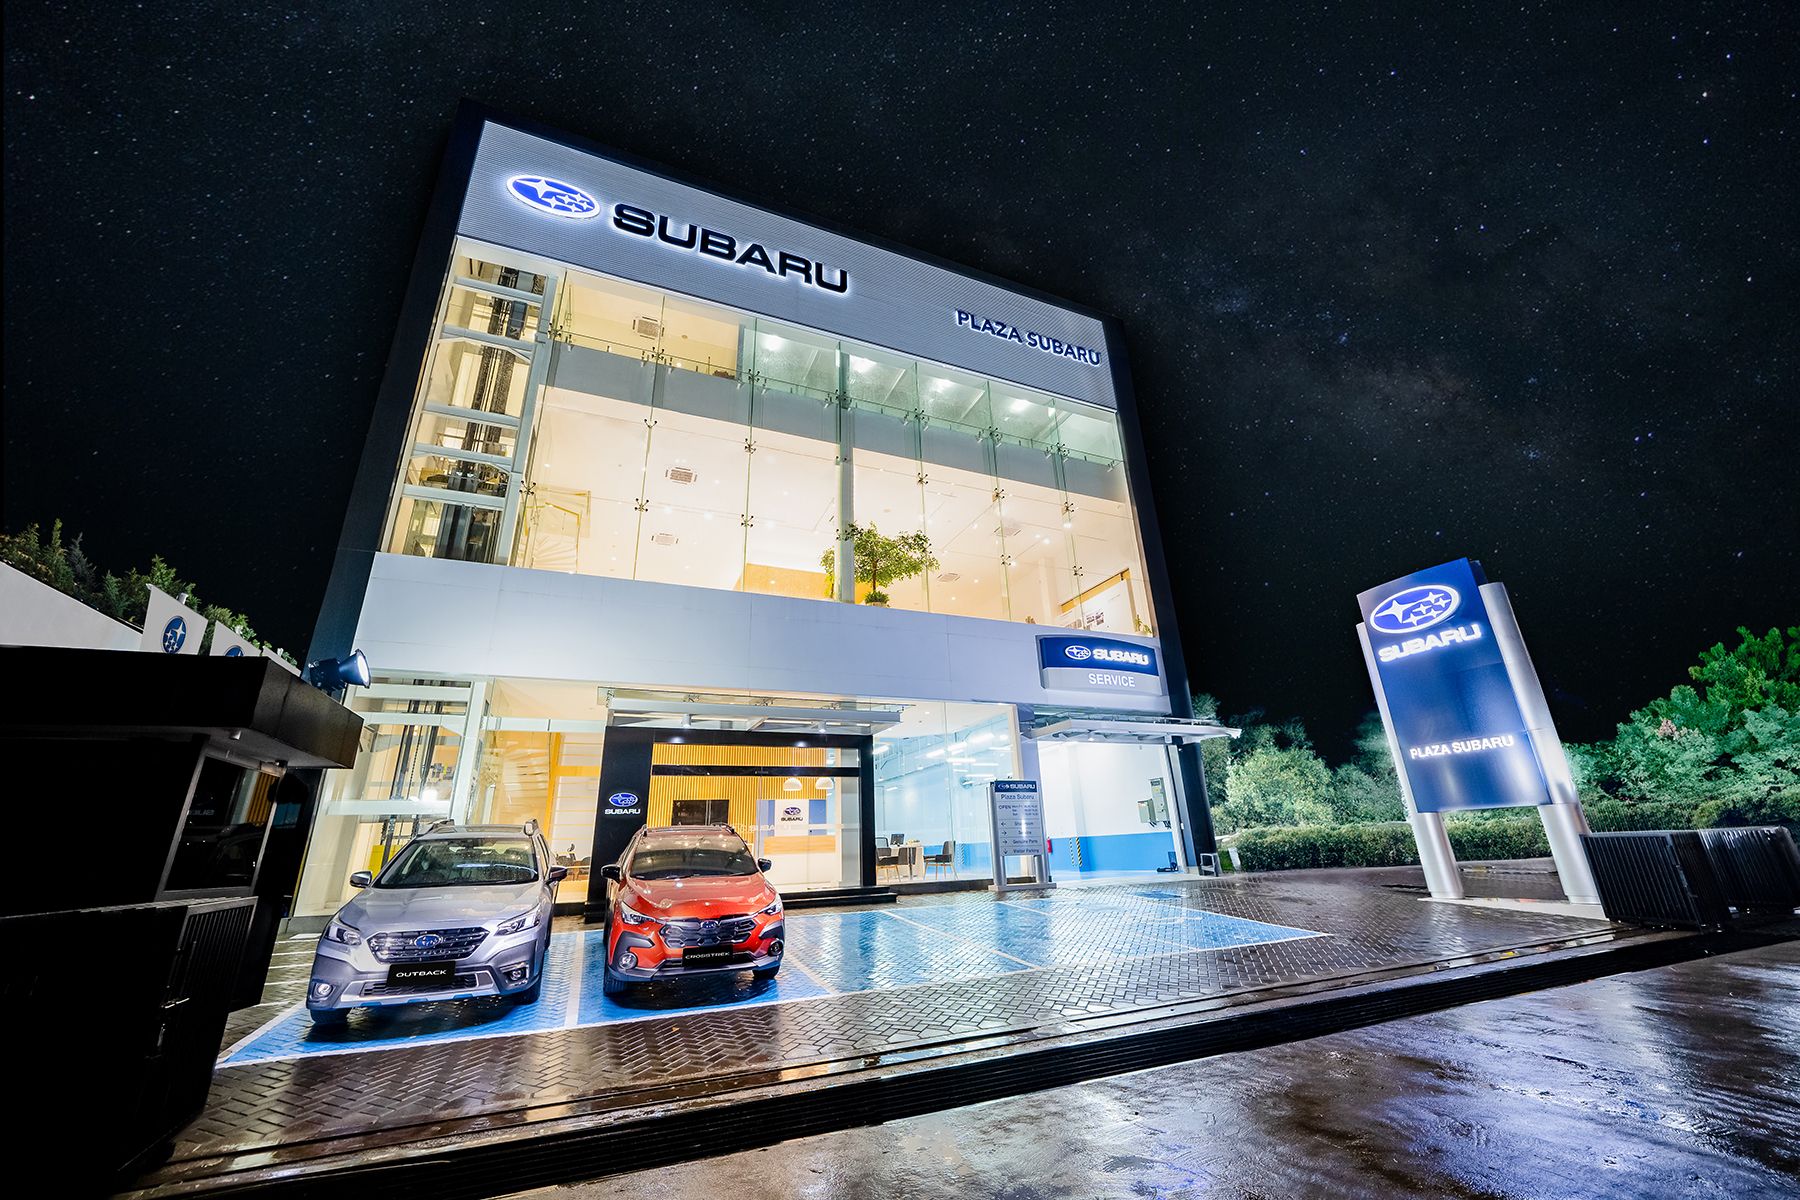 1 Plaza Subaru Bandung Dealer Frontlook at Night.jpg